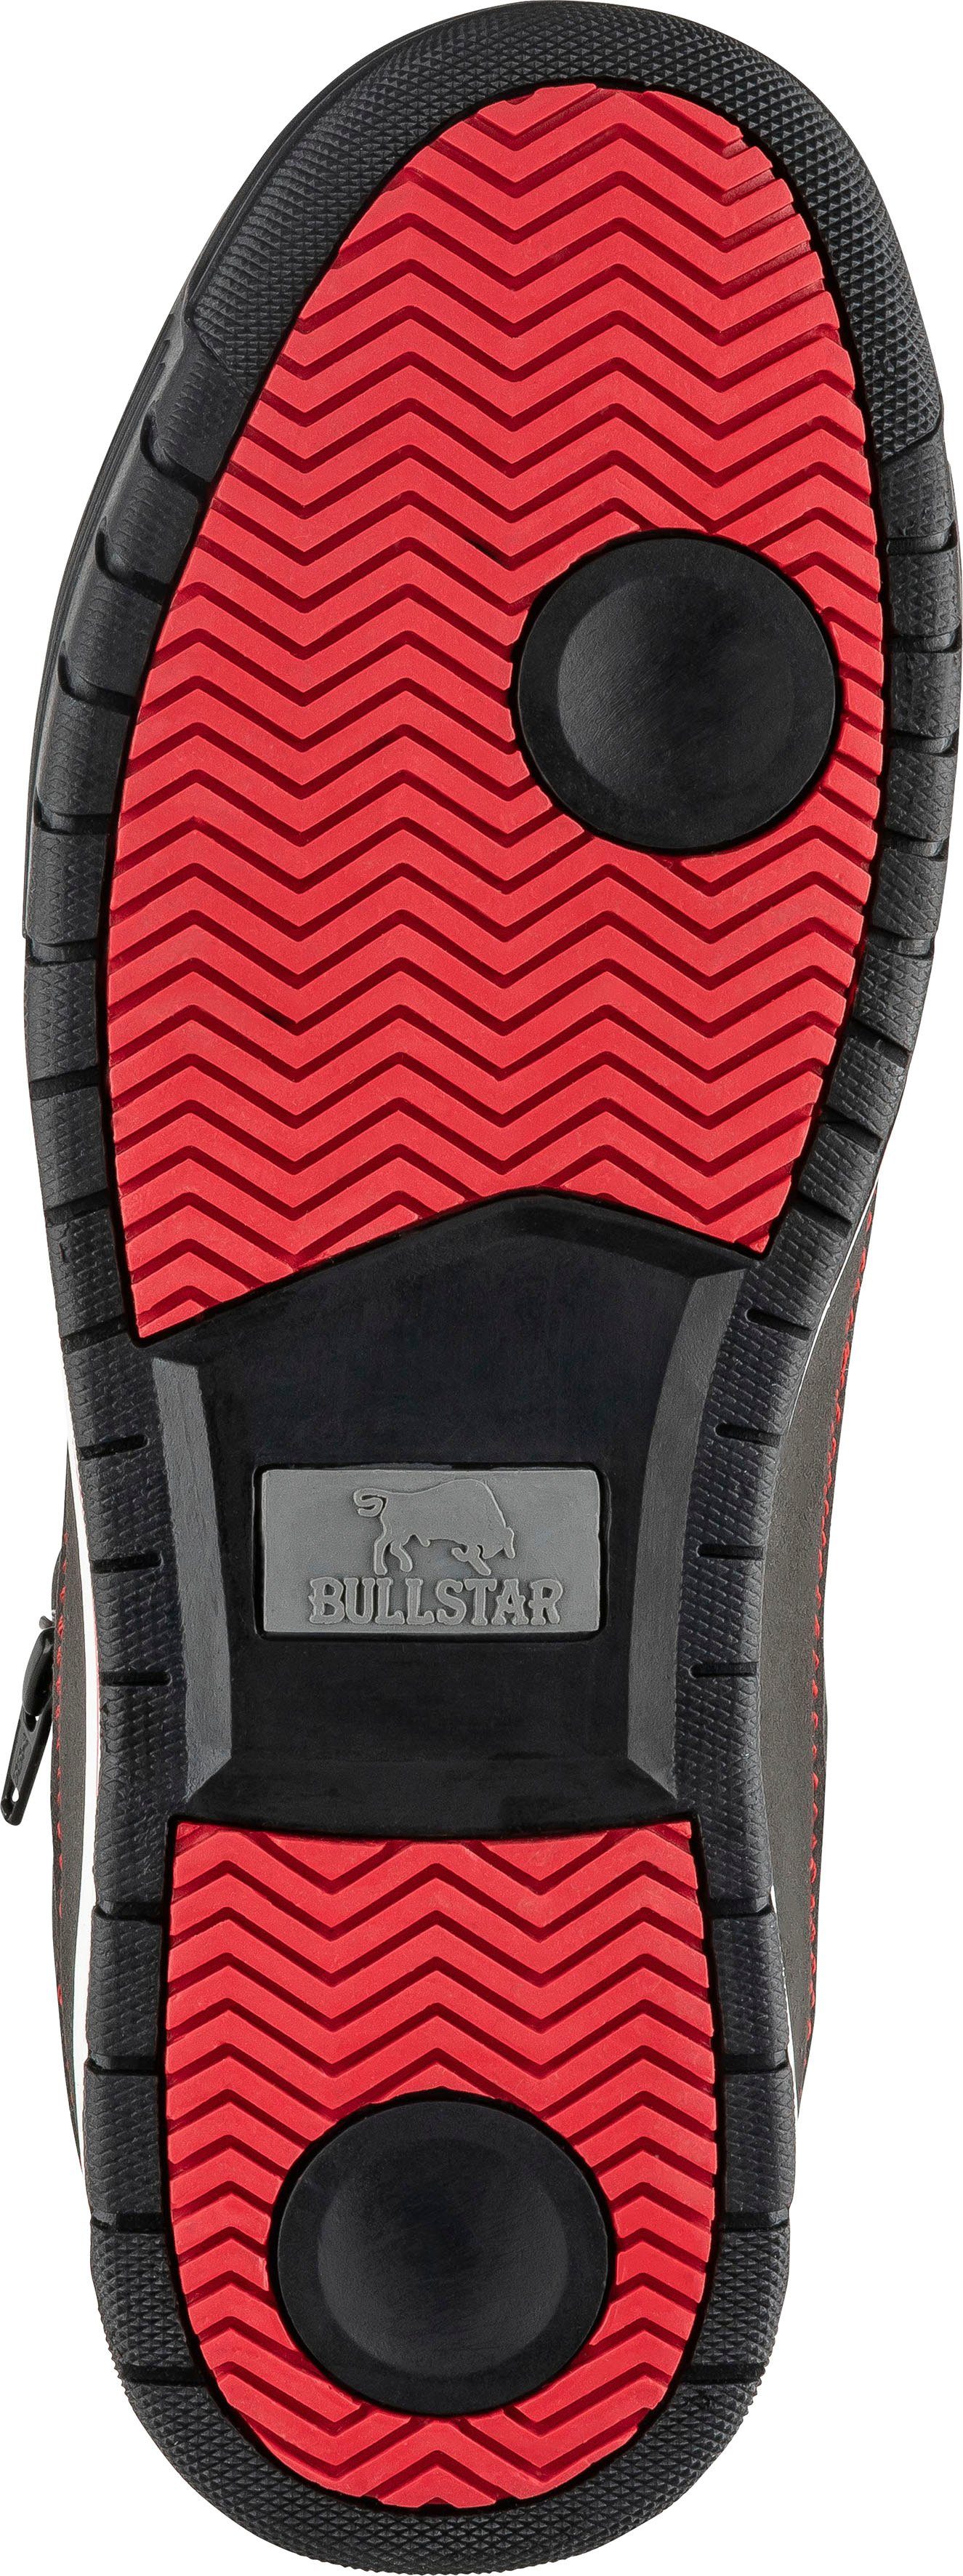 Bullstar JUMPX reißfest, S1p rutschhemmend, Sicherheitsschuh atmungsaktiv, mit Stahlkappe